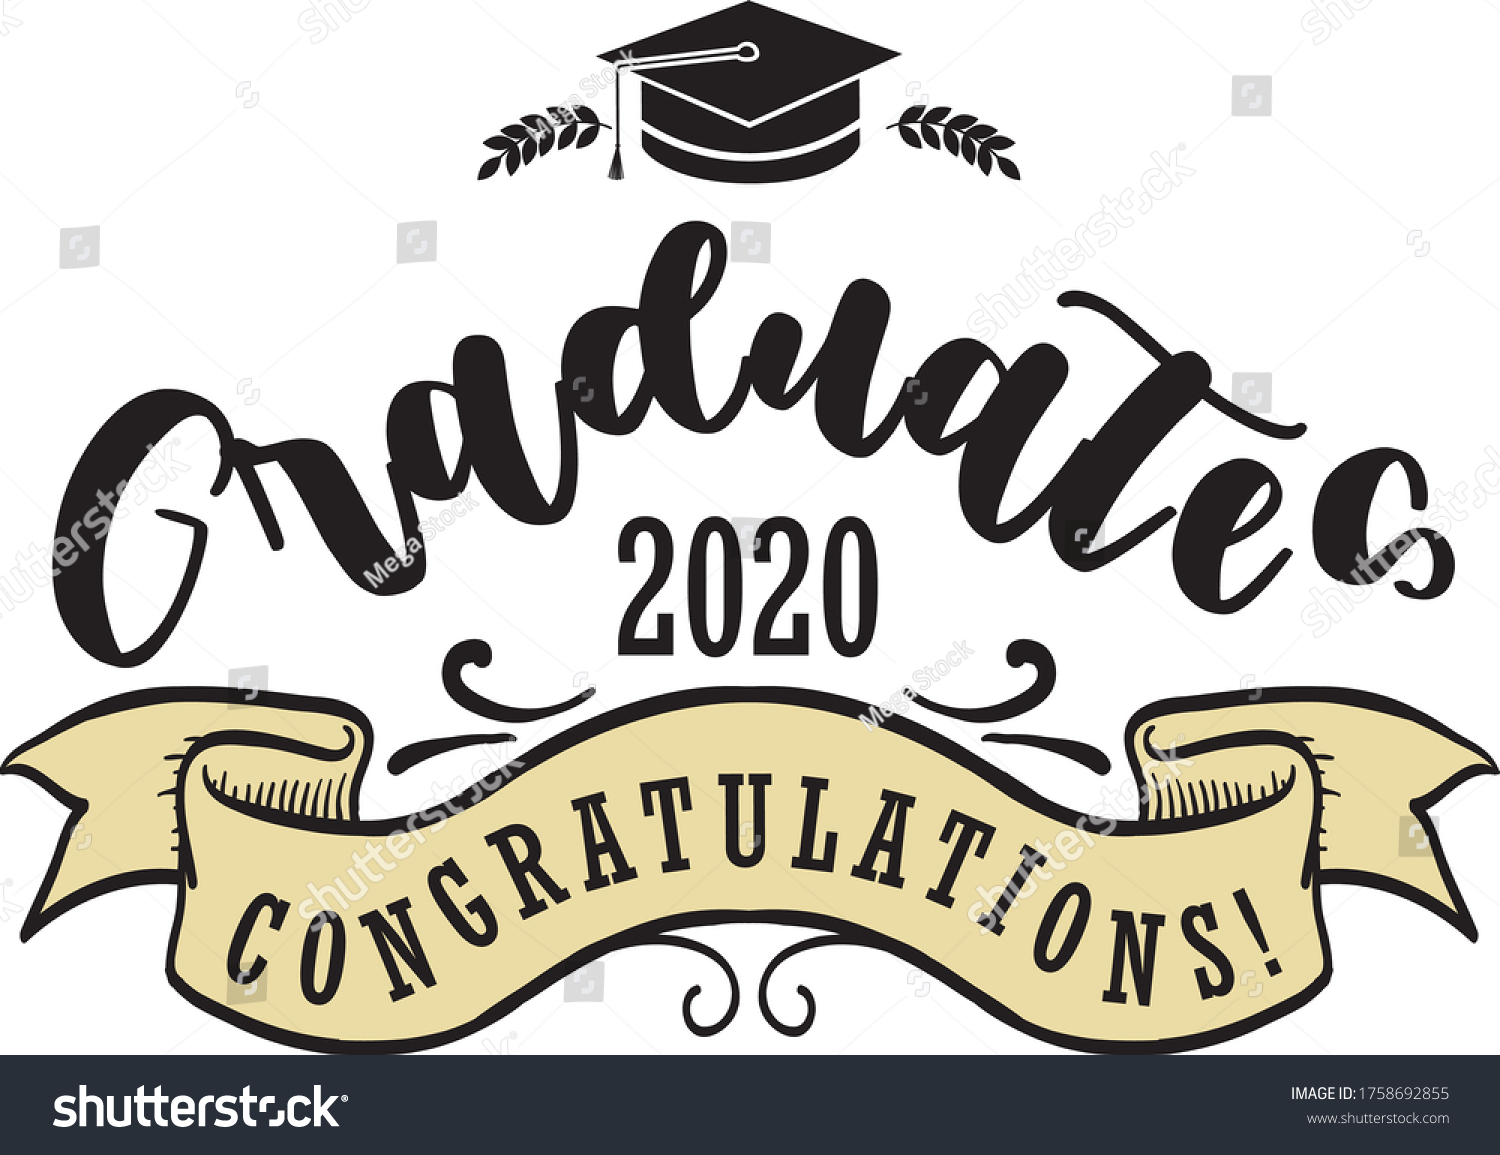 Congratulations Graduates 2020 Celebration Text Poster Stock Vector Royalty Free 1758692855 